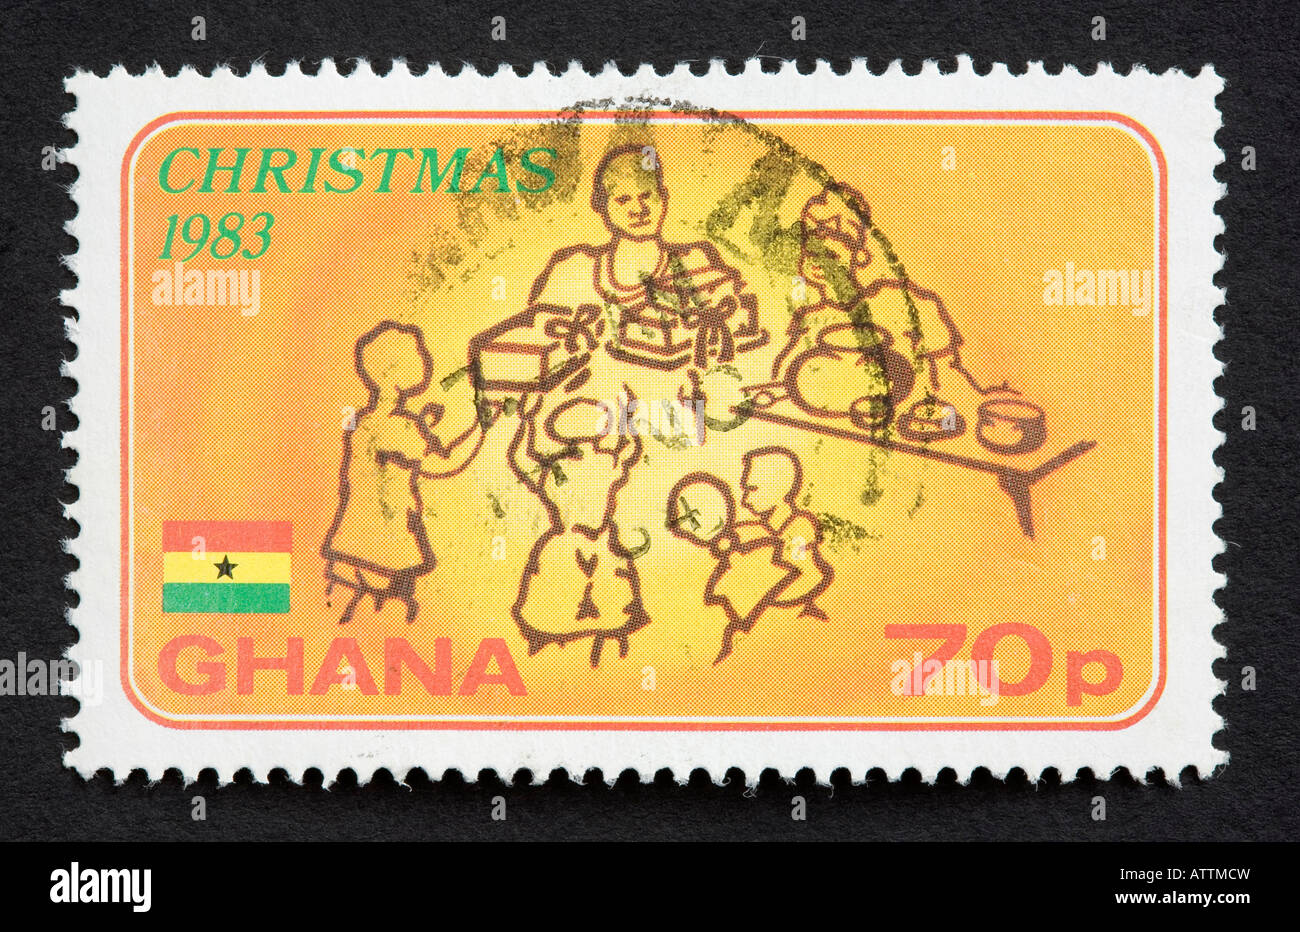 Ghana postage stamp Stock Photo